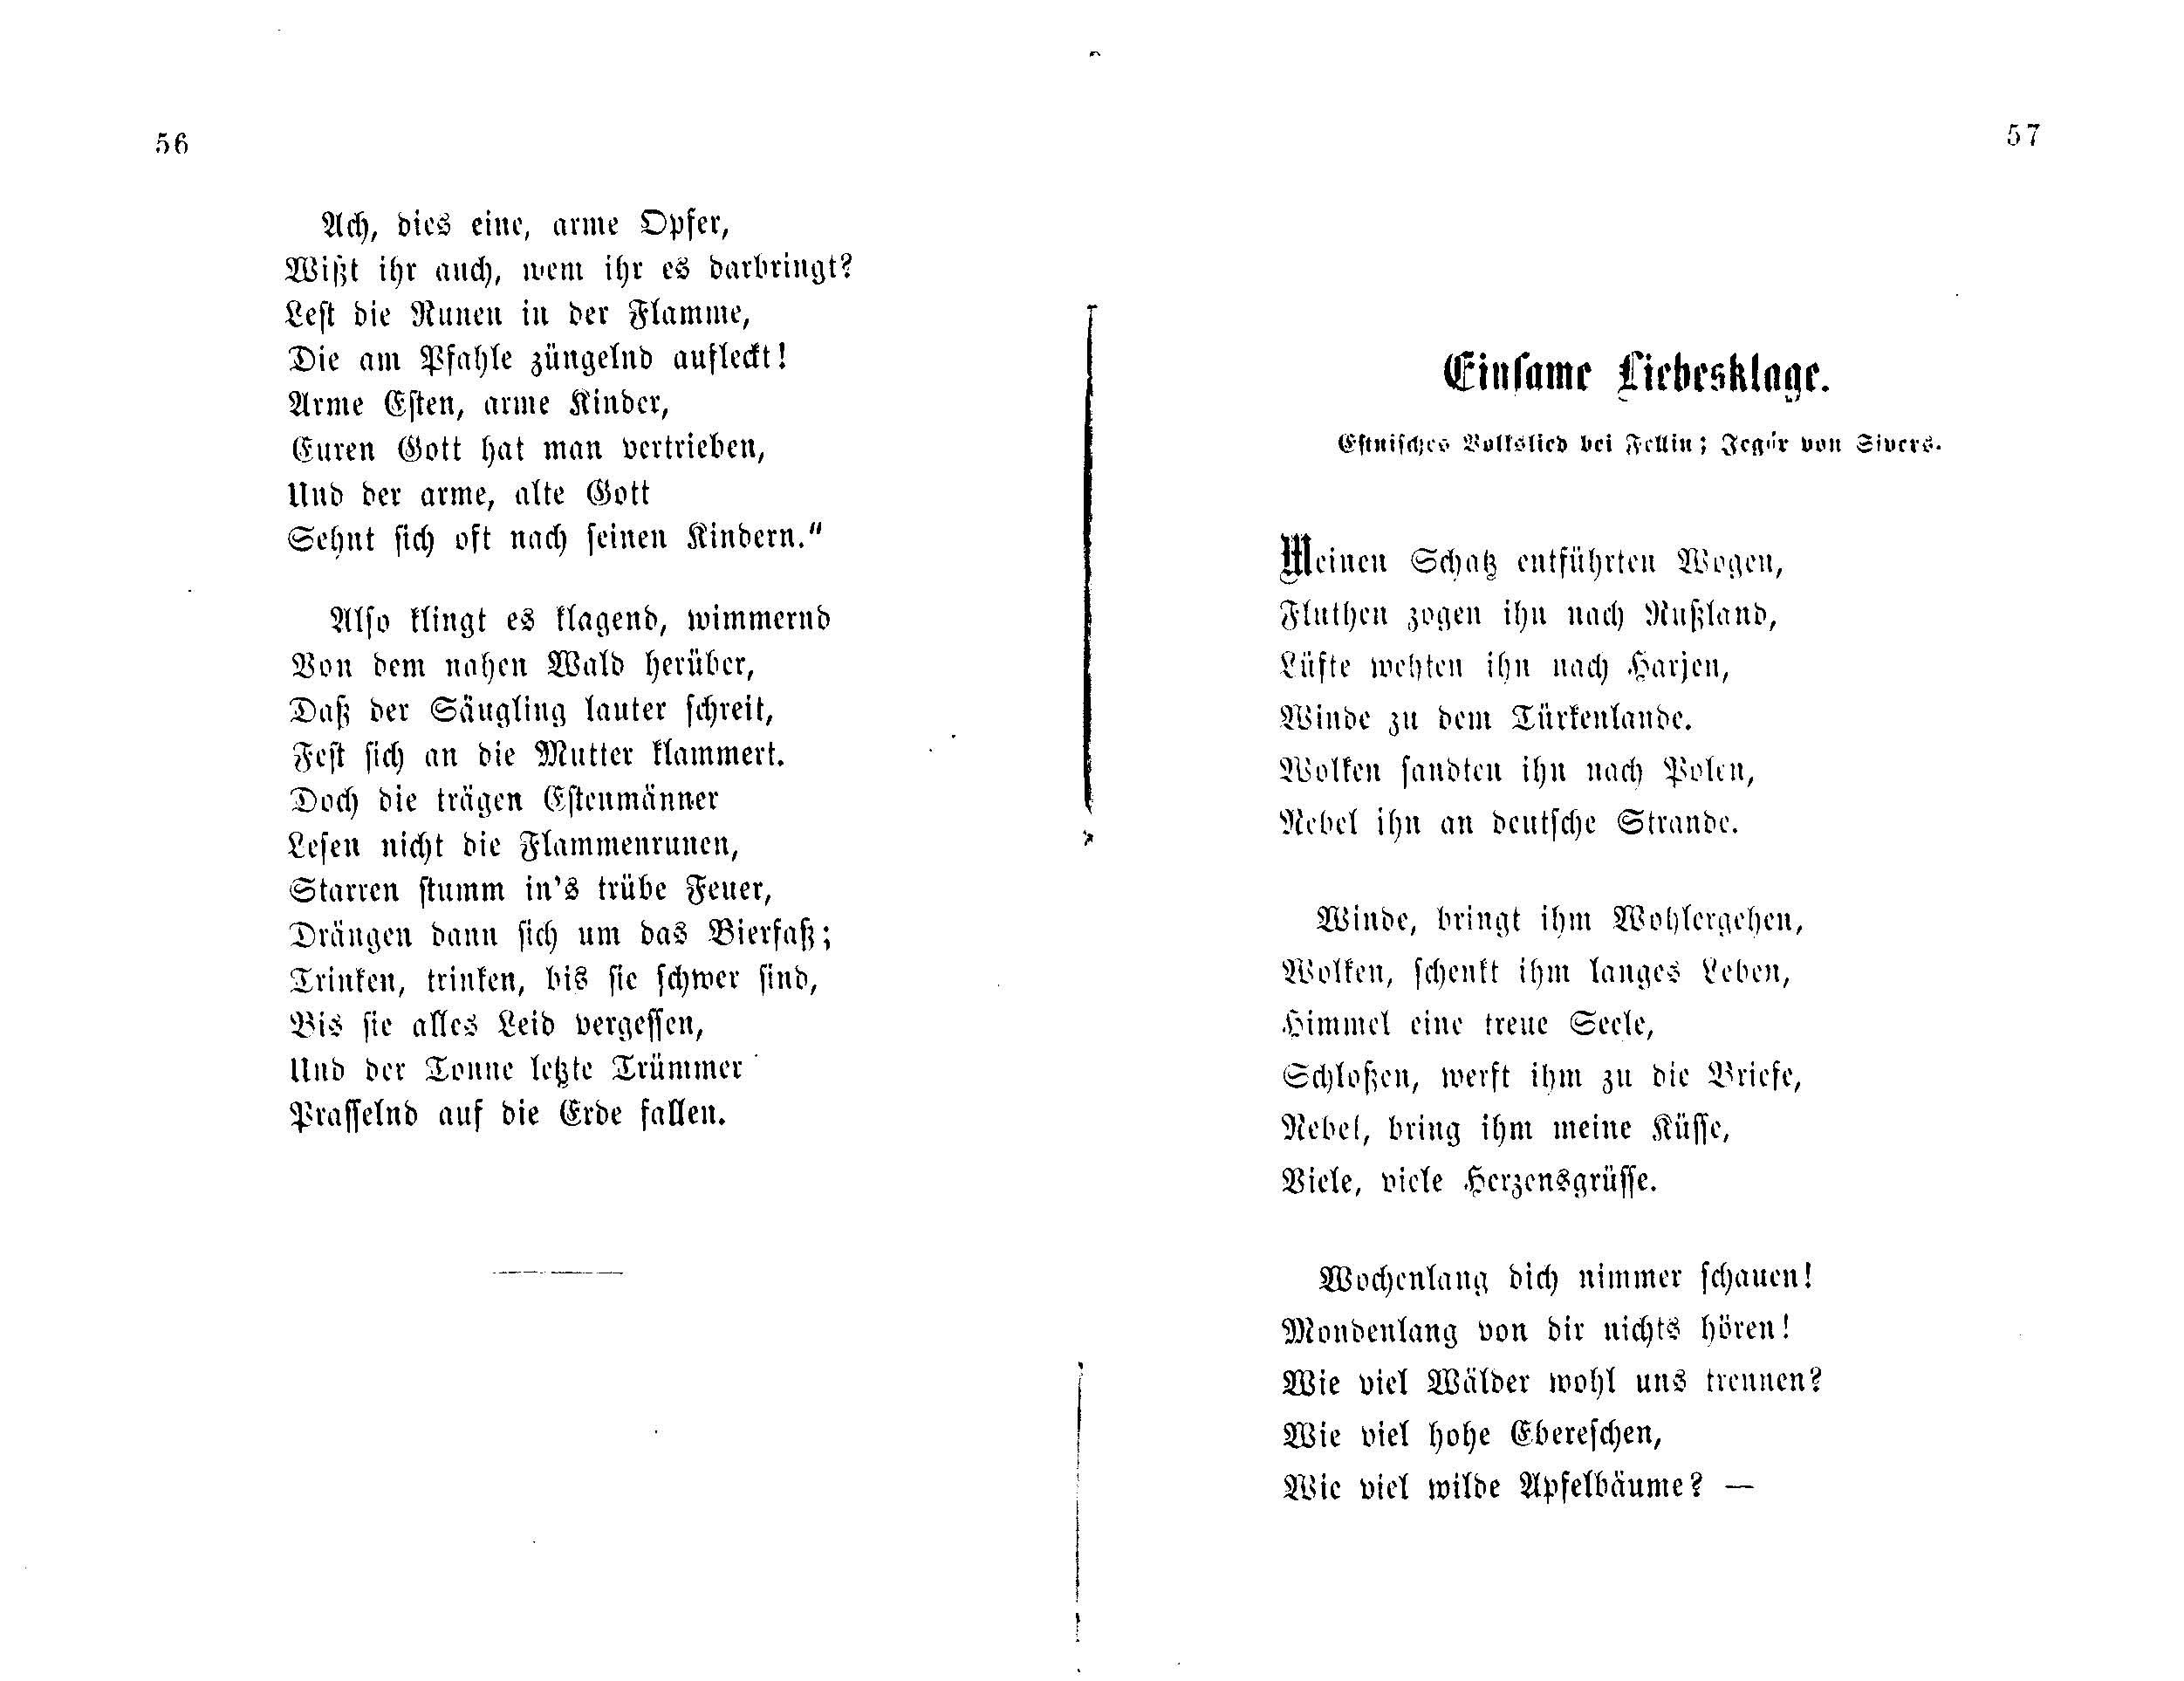 Livonenlieder (1877) | 30. (56-57) Main body of text